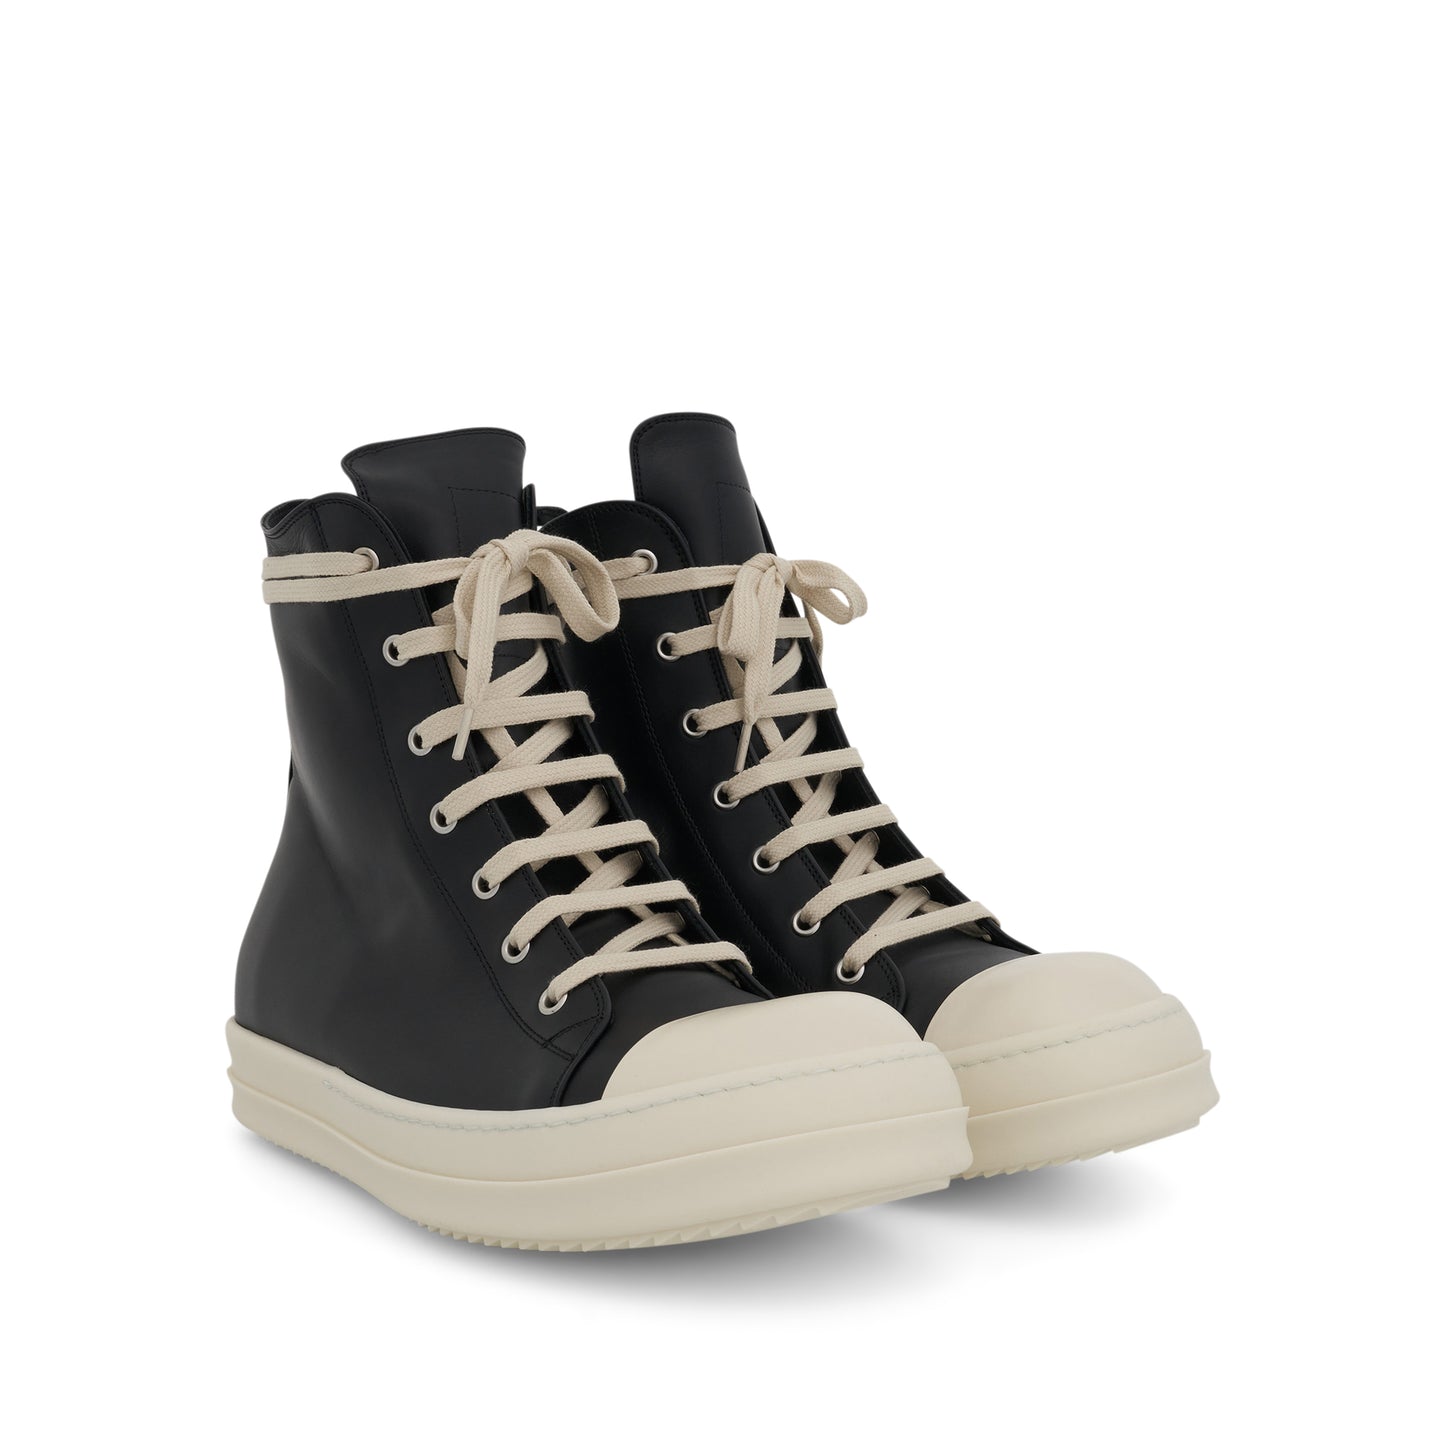 High Leather Sneakers in Black/Milk